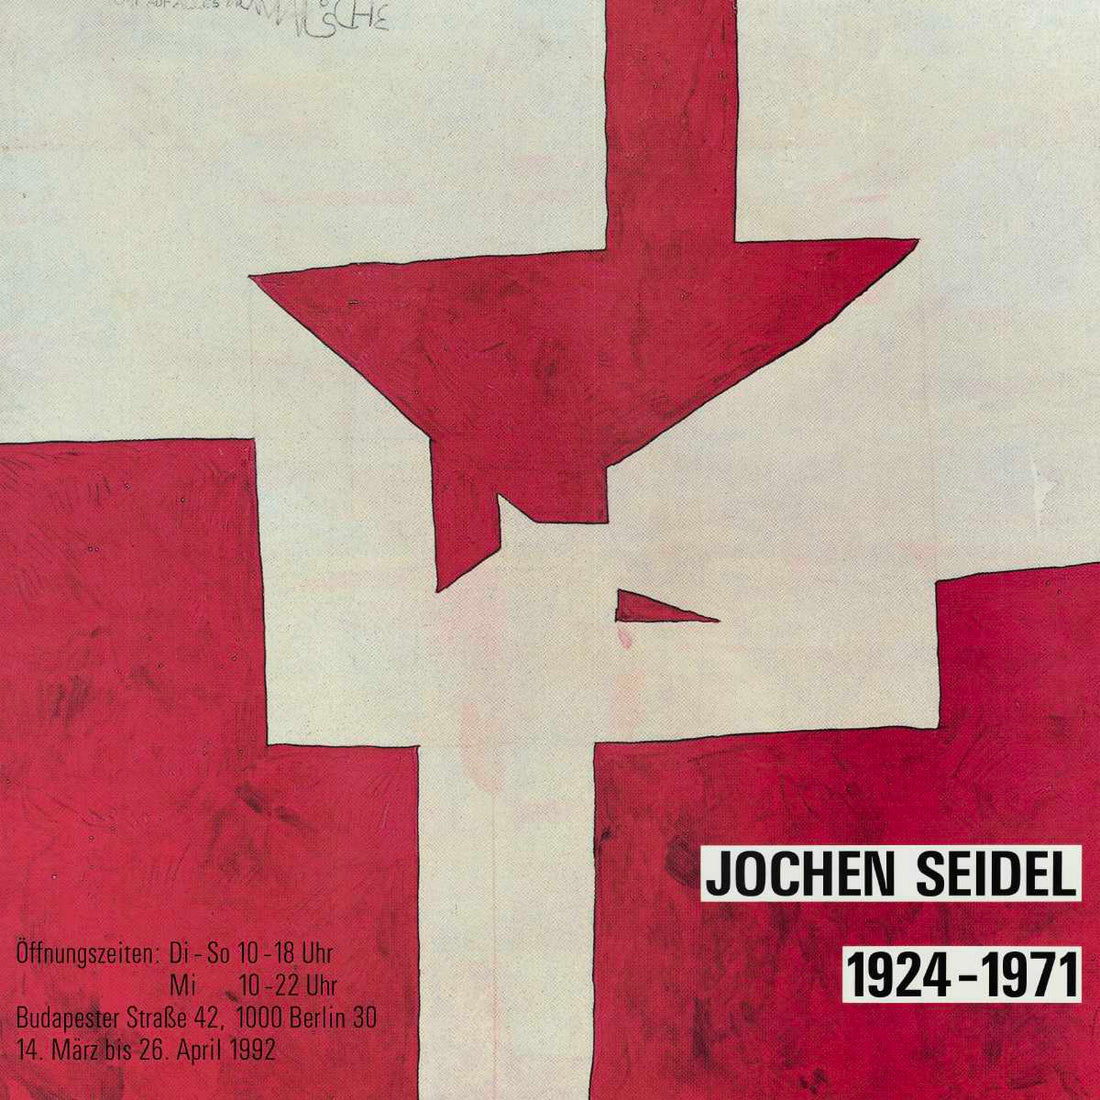 Jochen Seidel  1924-1971, Staatliche Kunsthalle Berlin, 1992